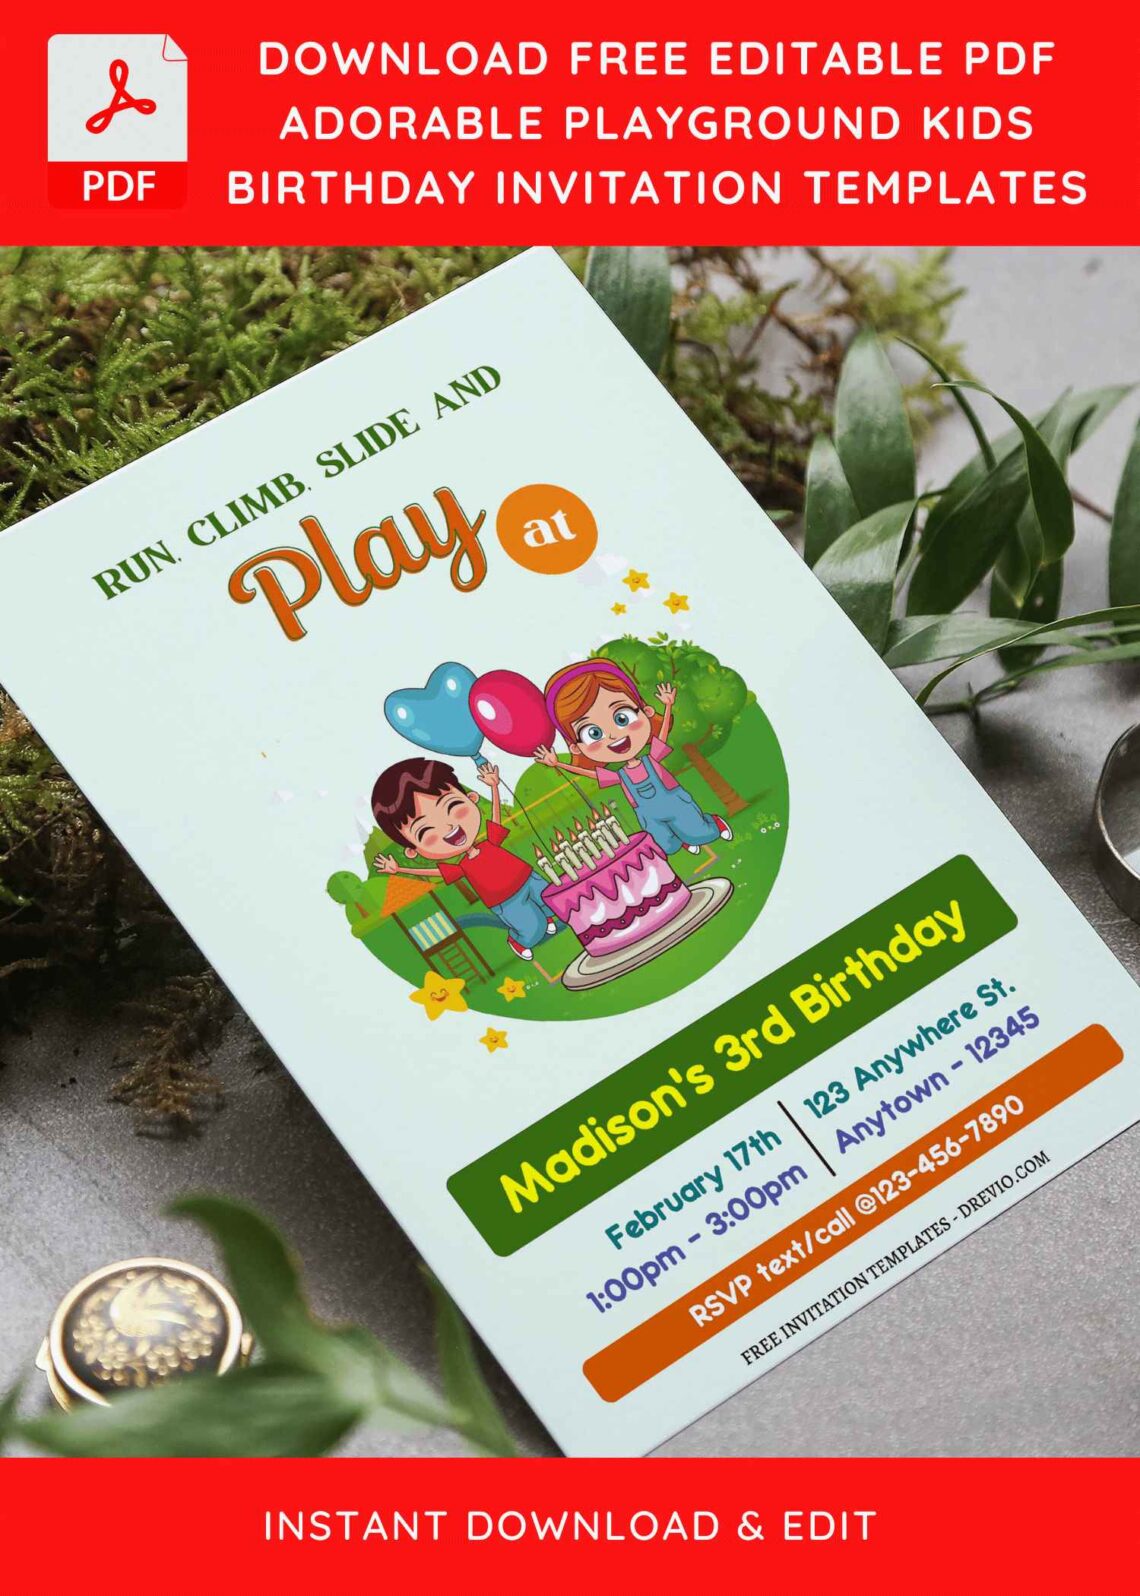 (Free Editable PDF) Playground Kids Birthday Party Invitation Templates F